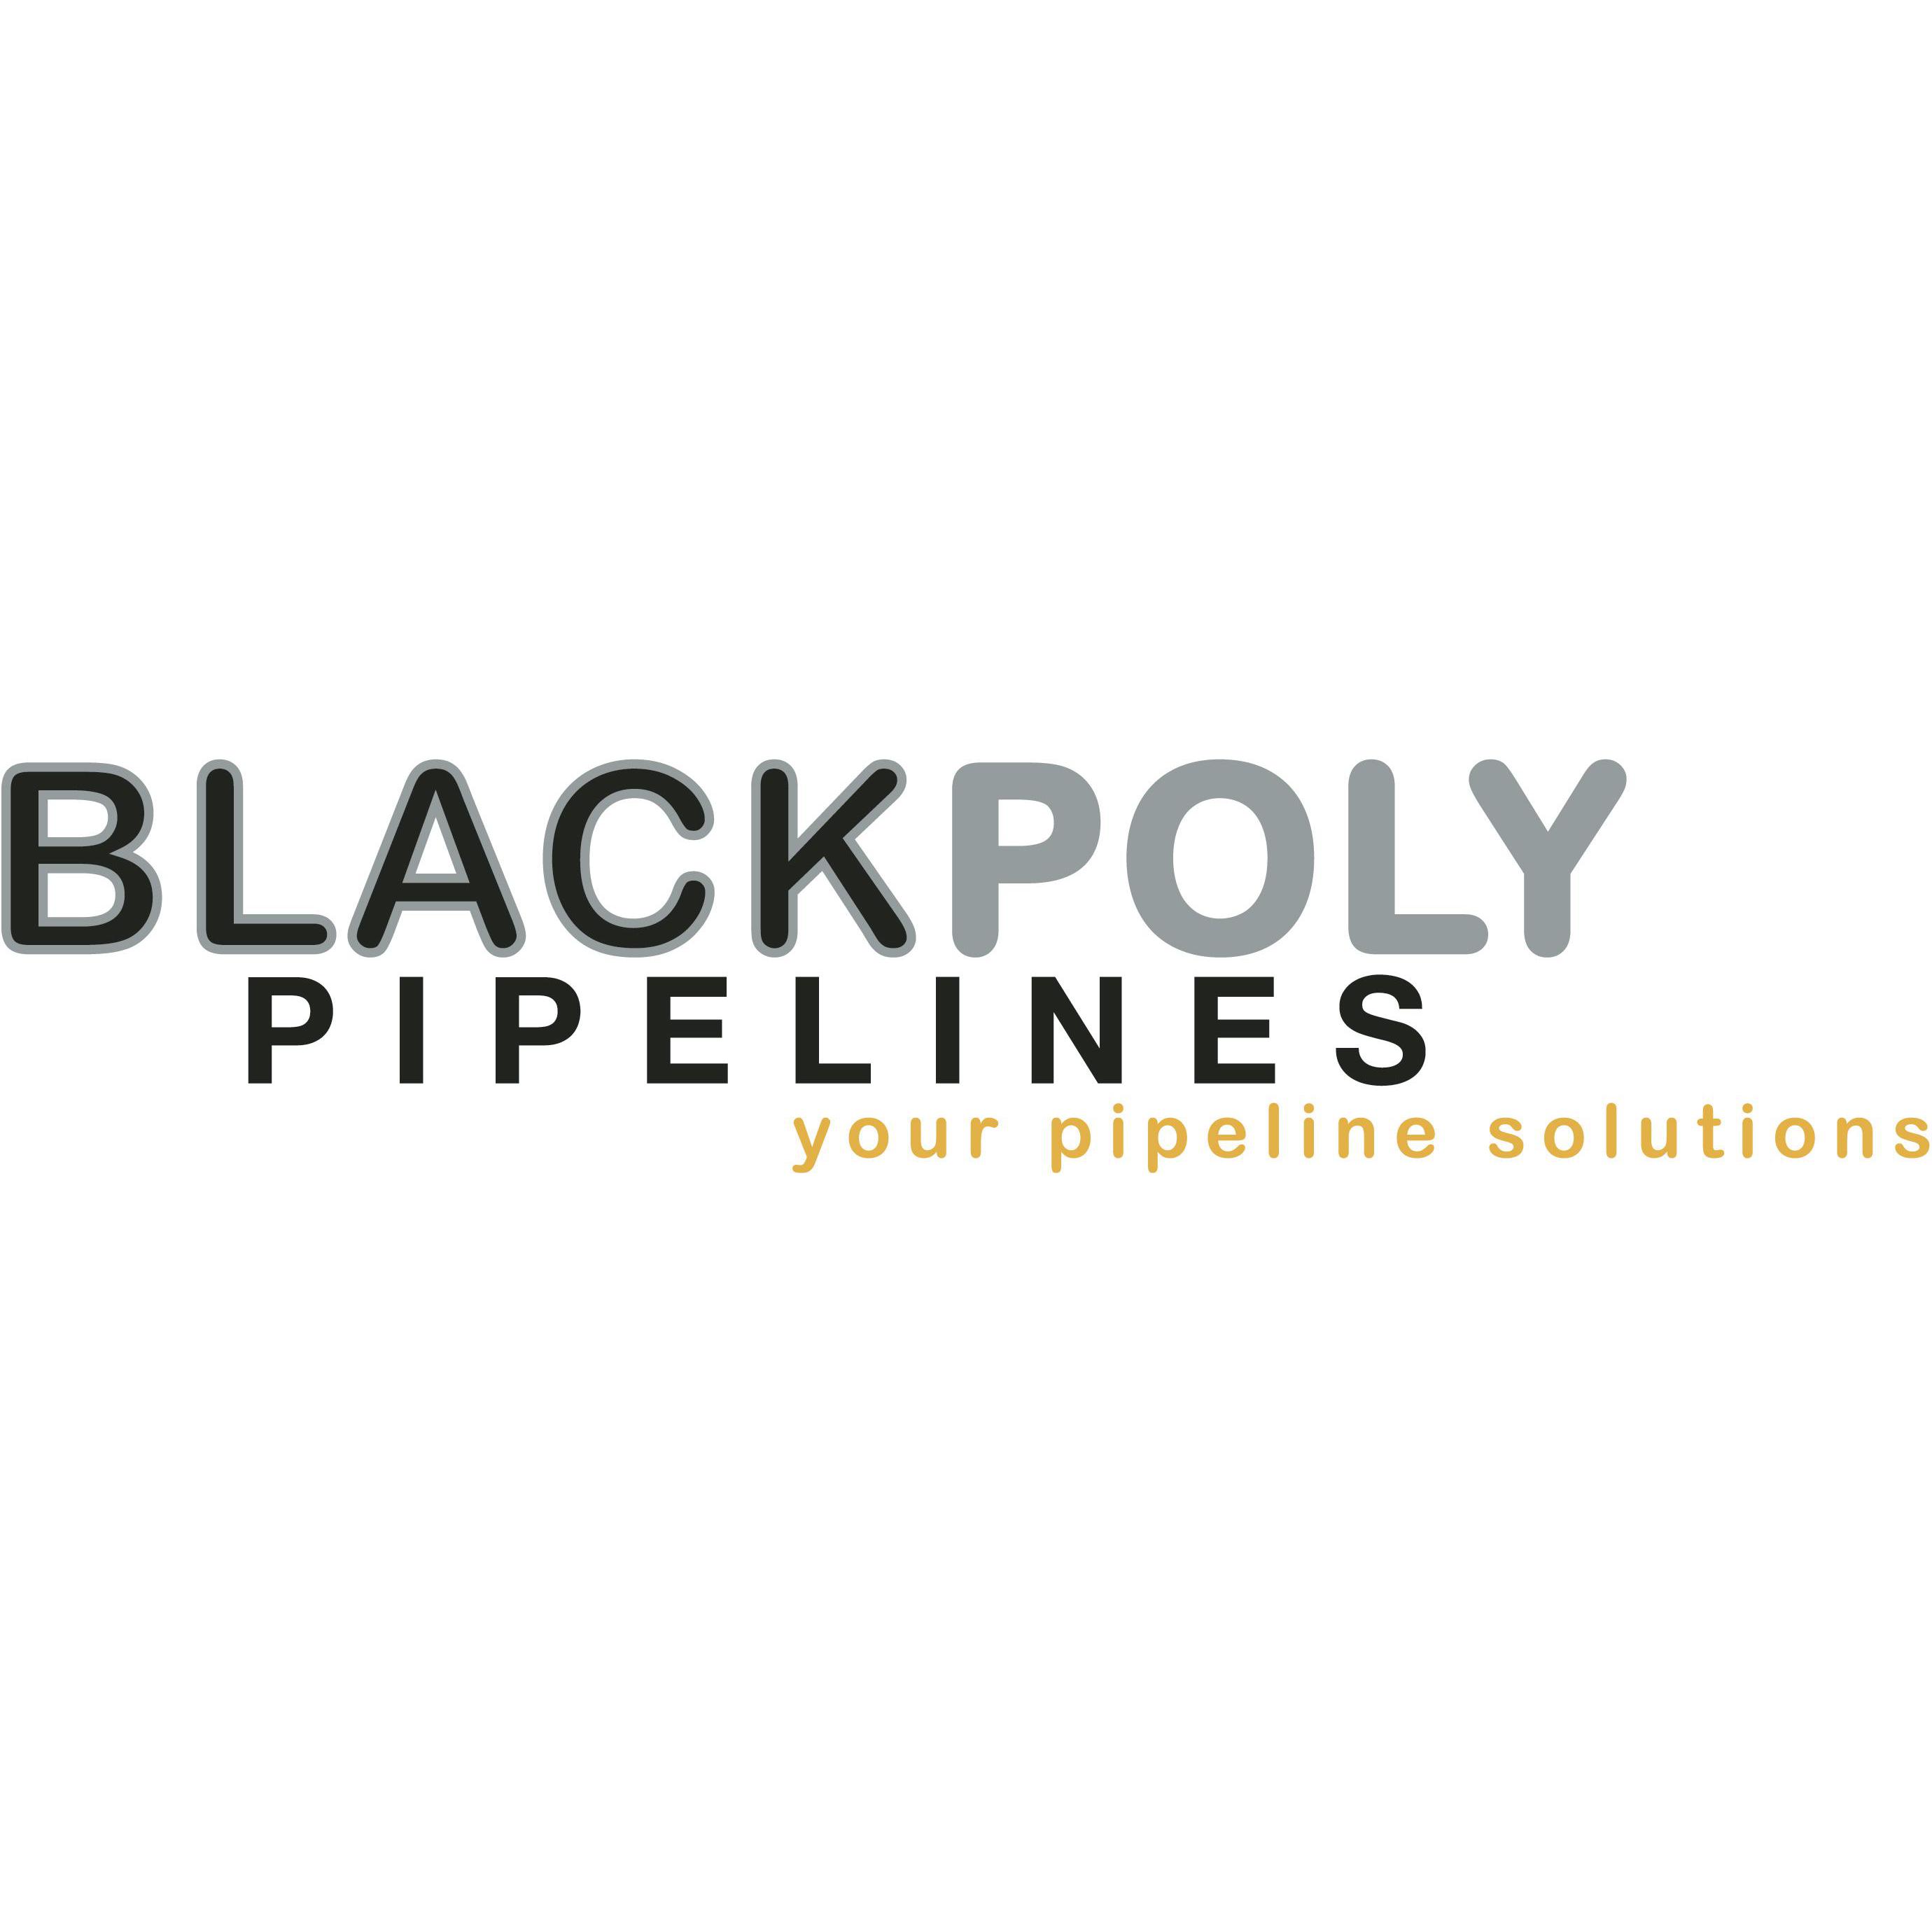 Black Poly Pipelines - Orange, NSW - (02) 6361 4922 | ShowMeLocal.com